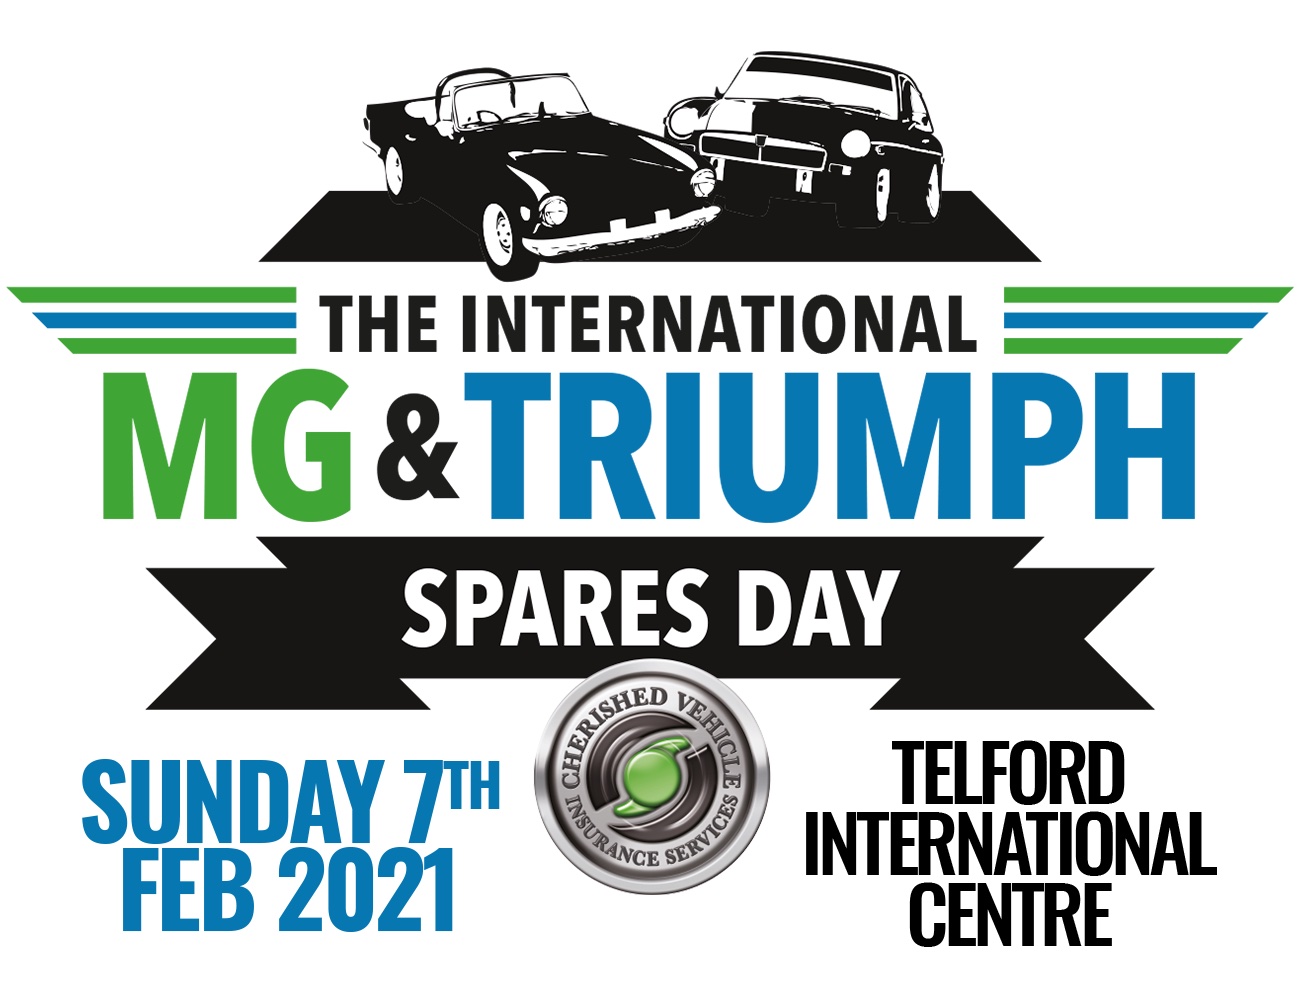 ERNEUT VERSCHOBEN! MG & Triumph Spares Day Telford